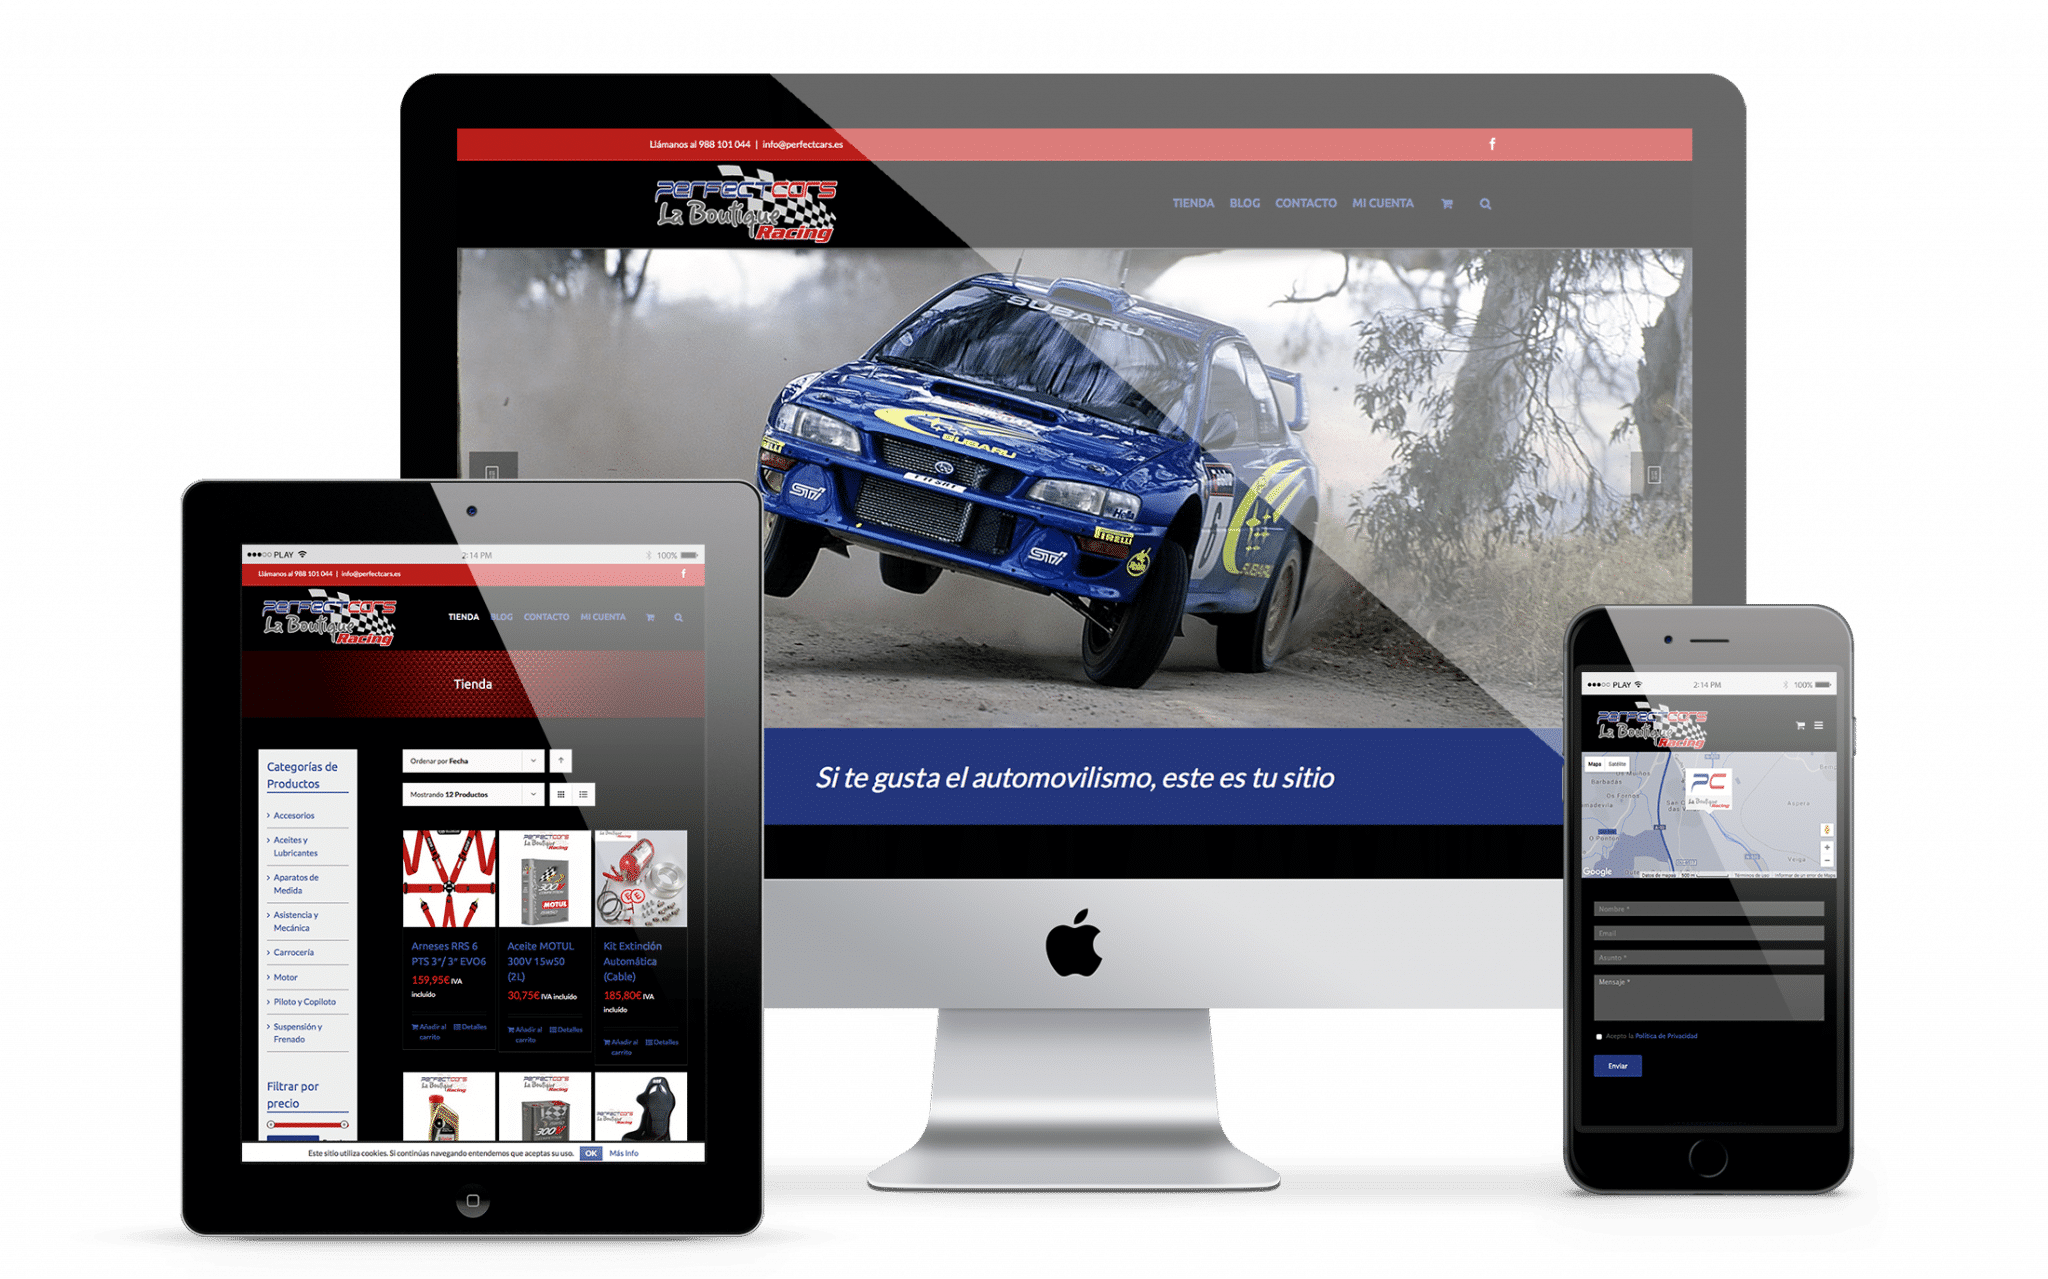 perfect cars la boutique racing - inova3 - Marketing digital desde ourense